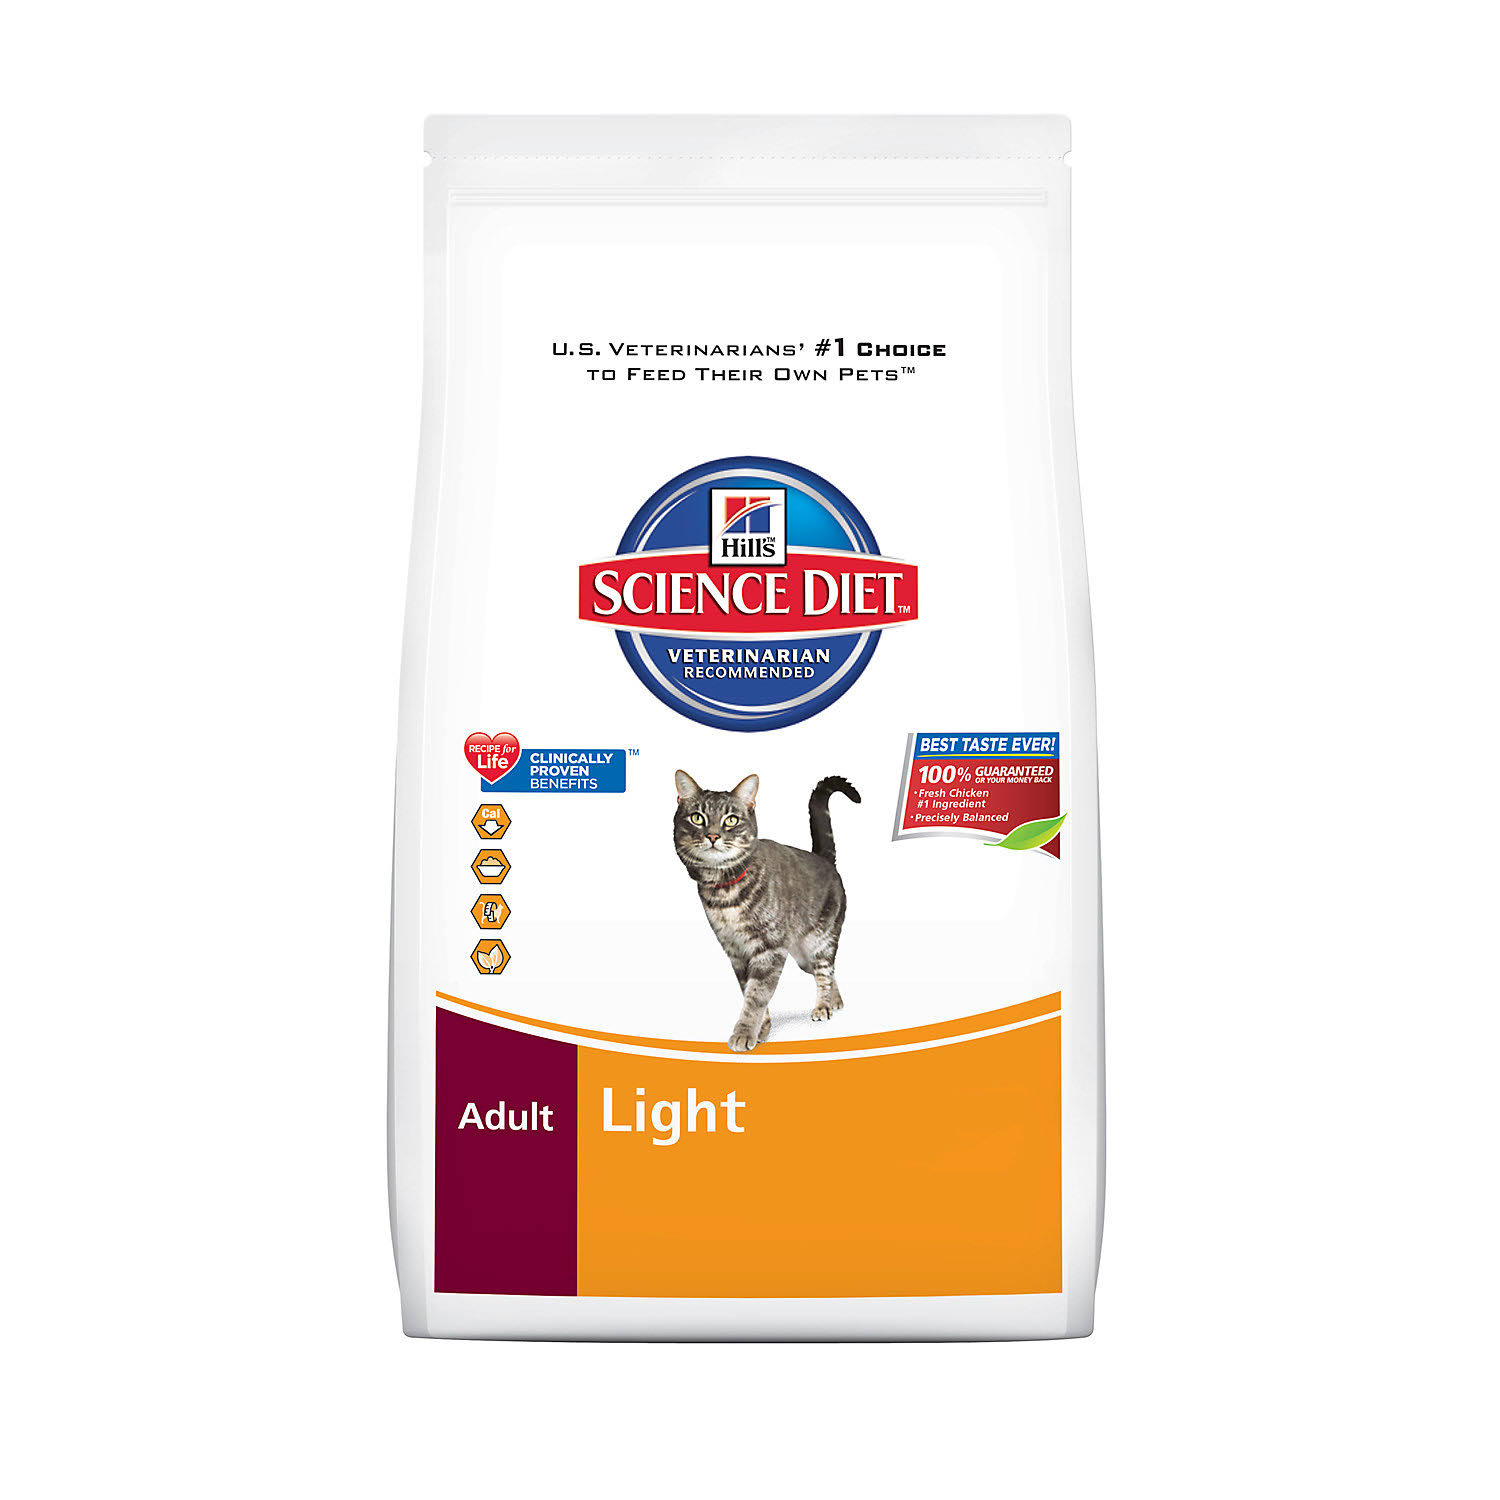 Hill's Science Diet Adult Light Chicken Recipe Dry Cat Food - 7lb